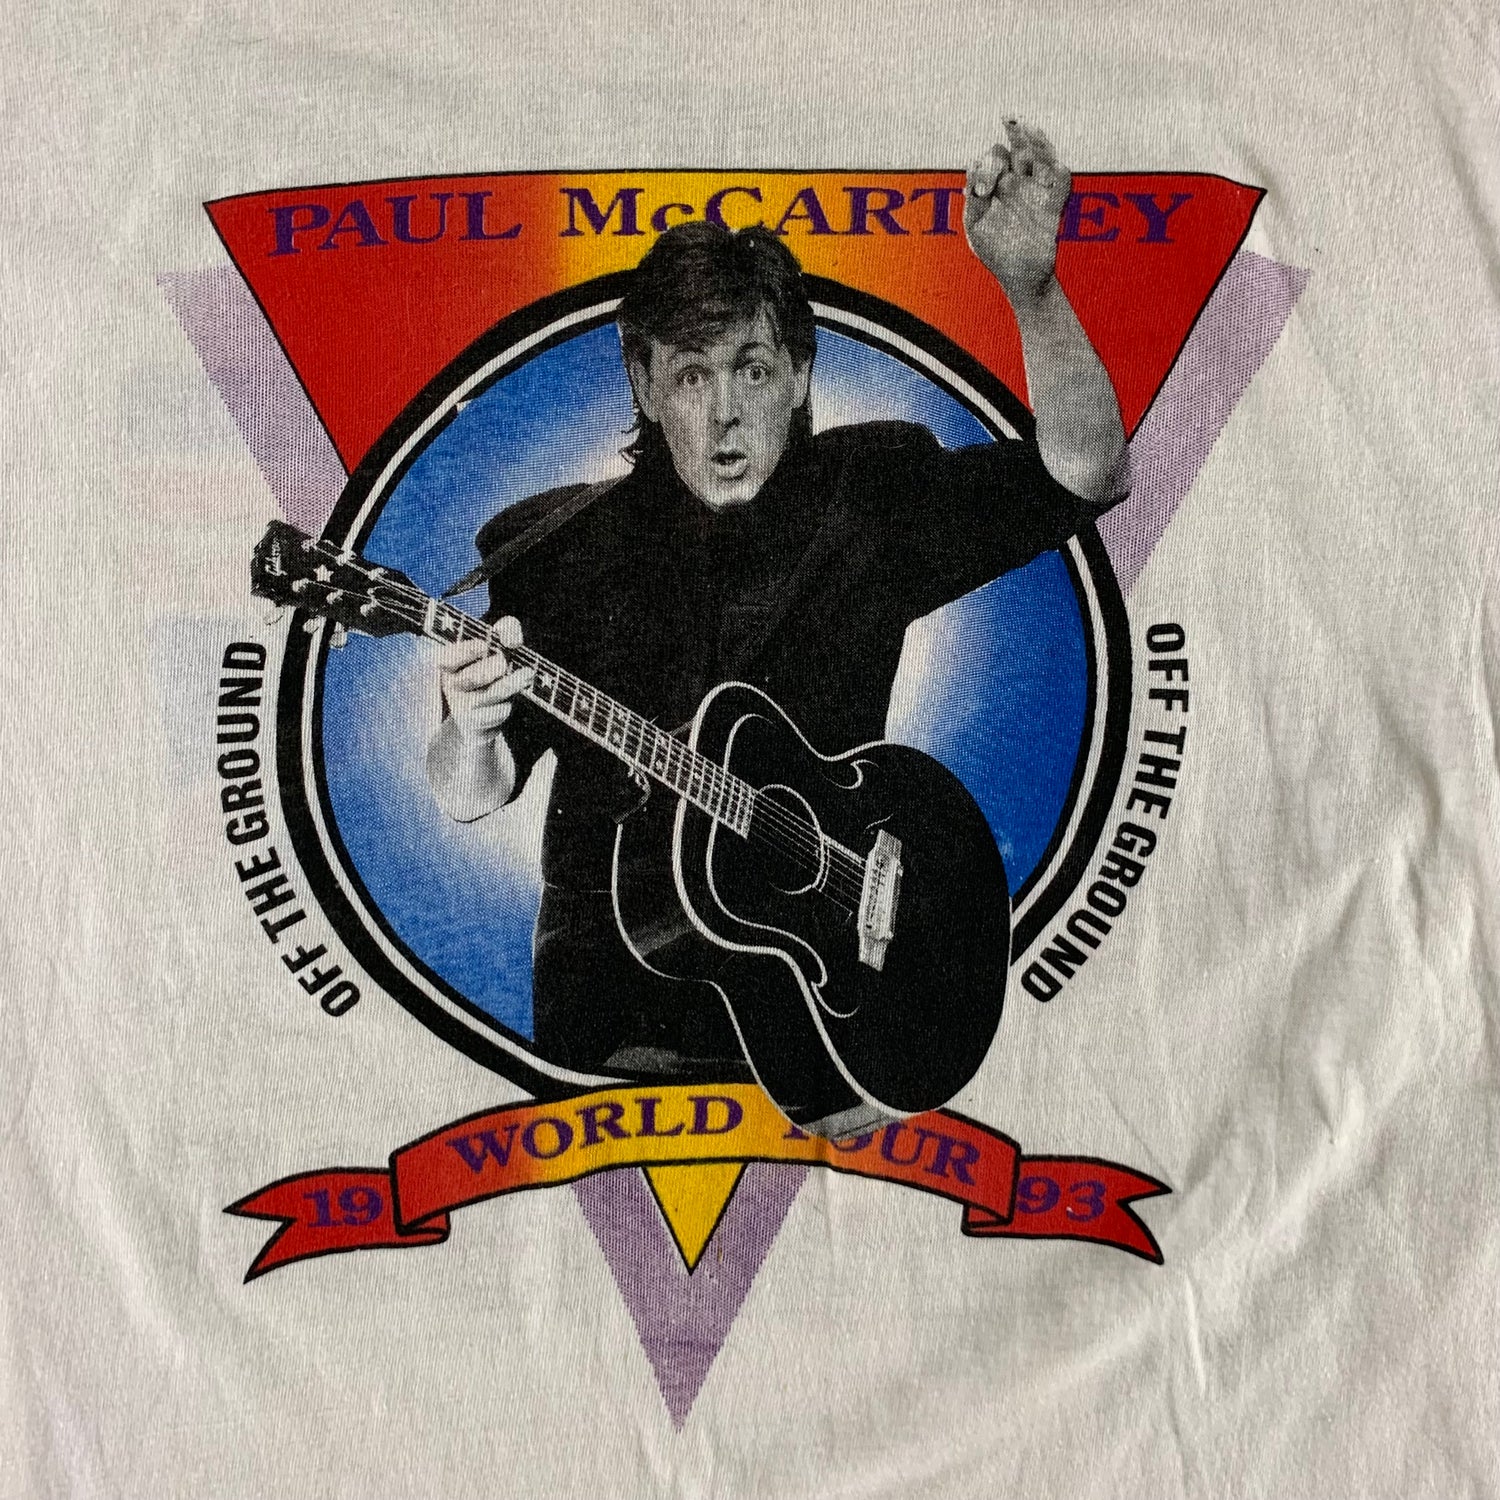 Vintage 1993 Paul McCartney T-shirt size XL